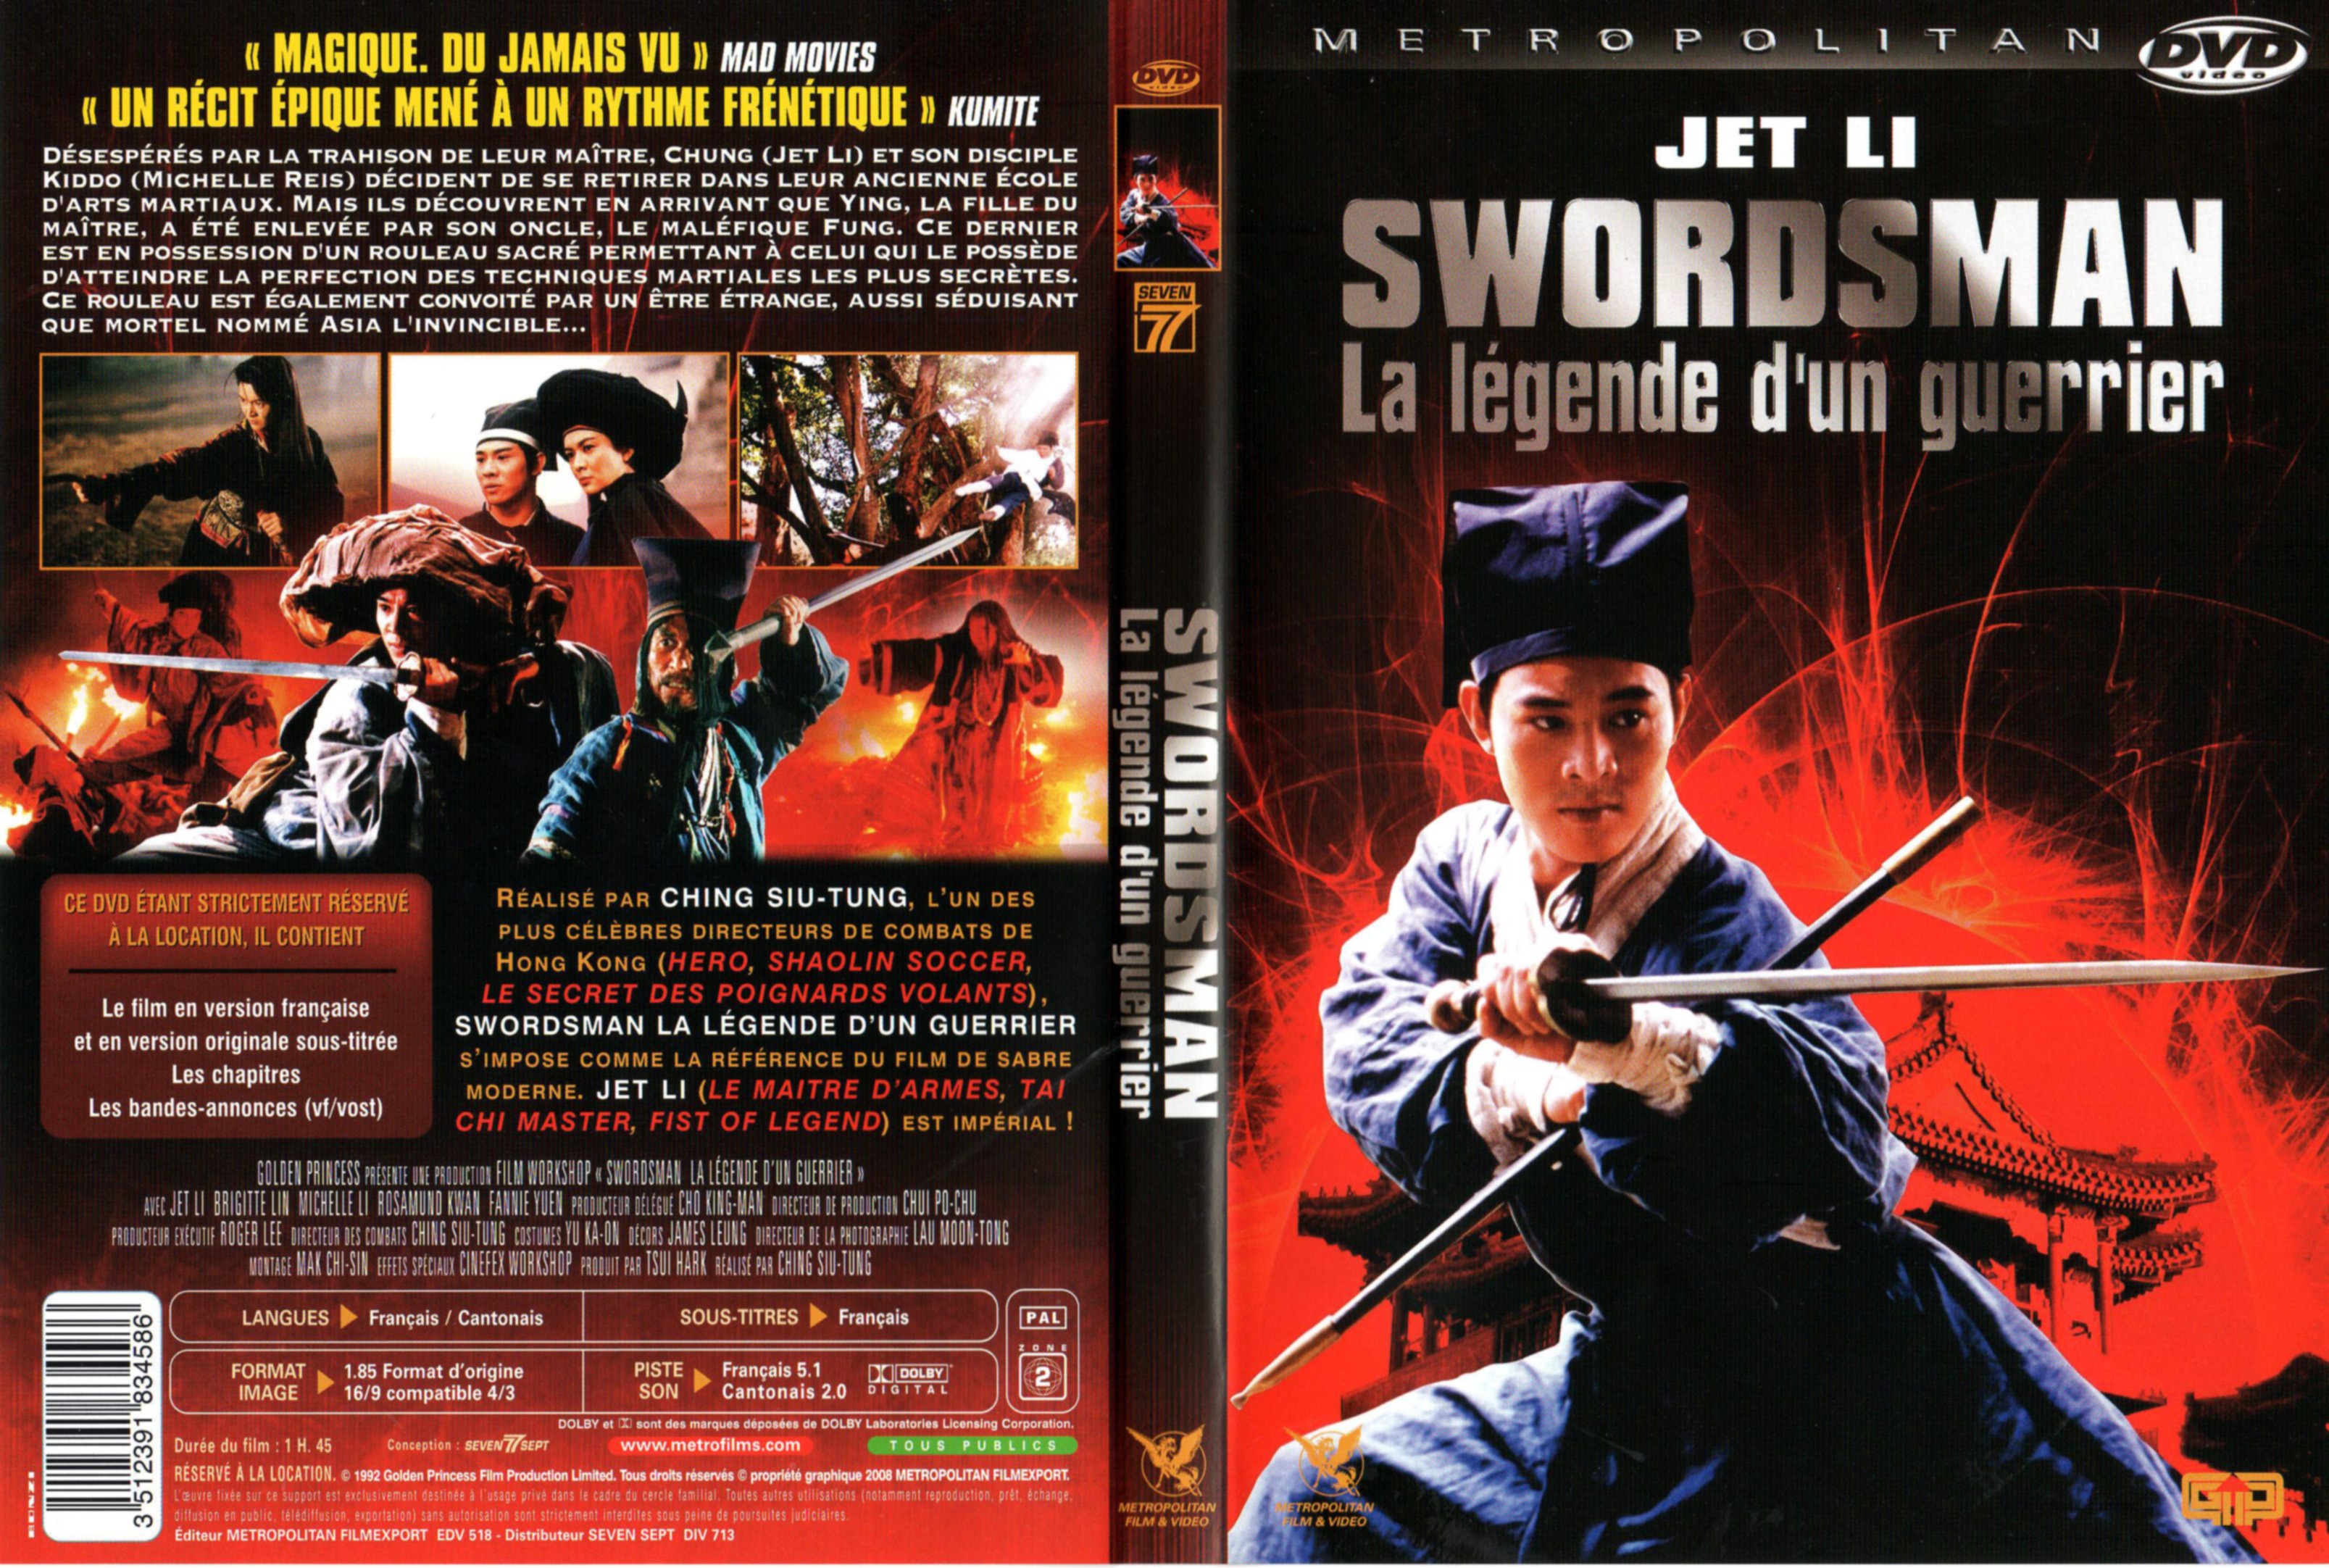 Jaquette DVD Swordsman